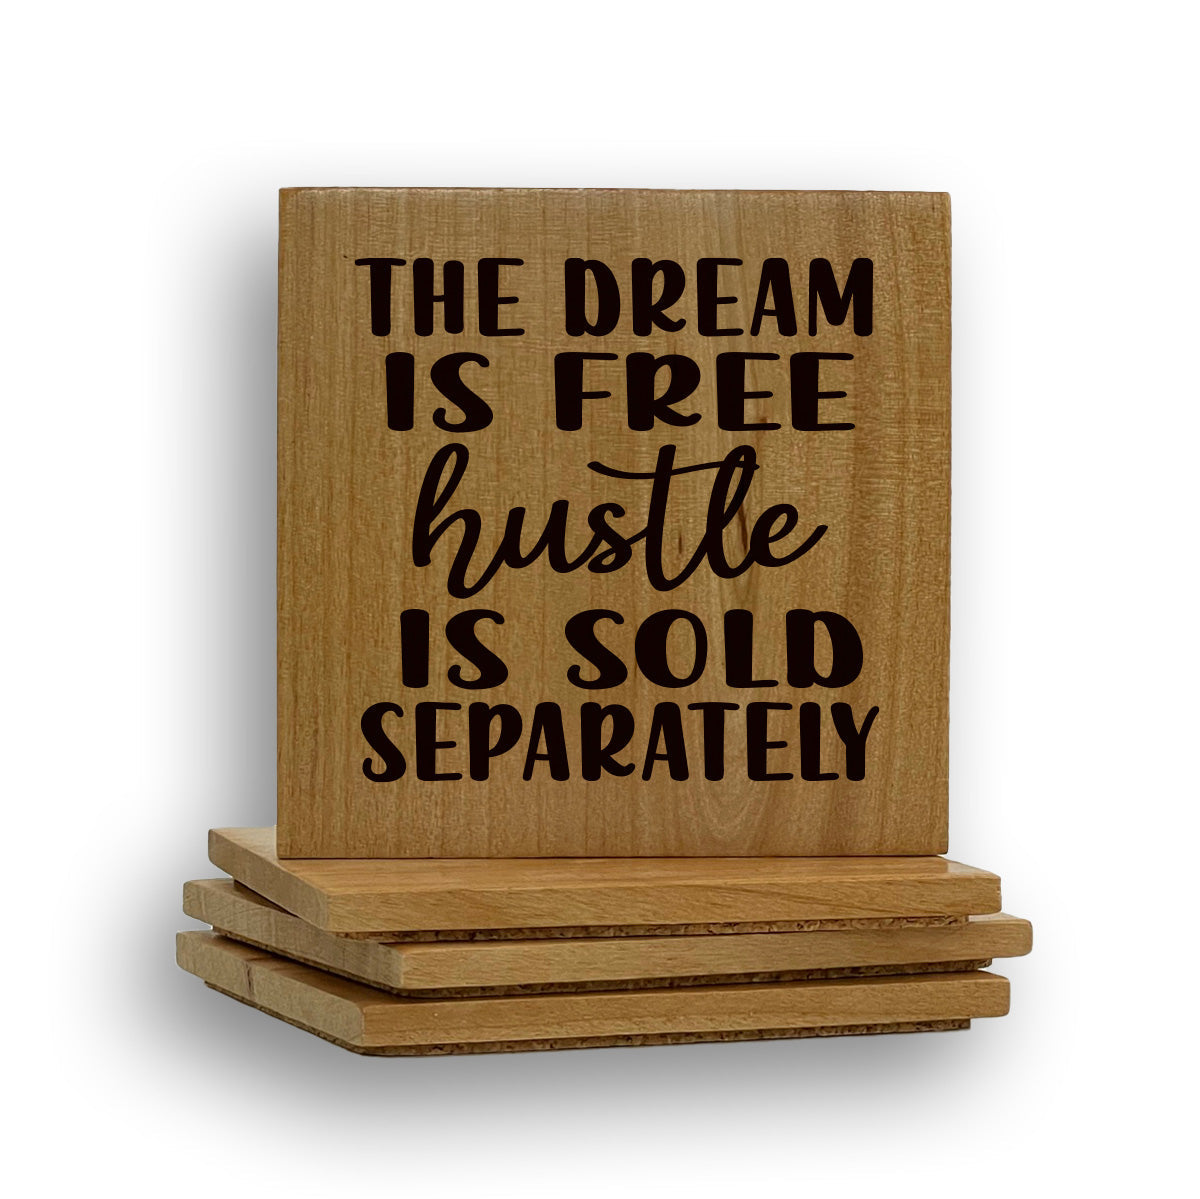 Dream Free Hustle Coaster